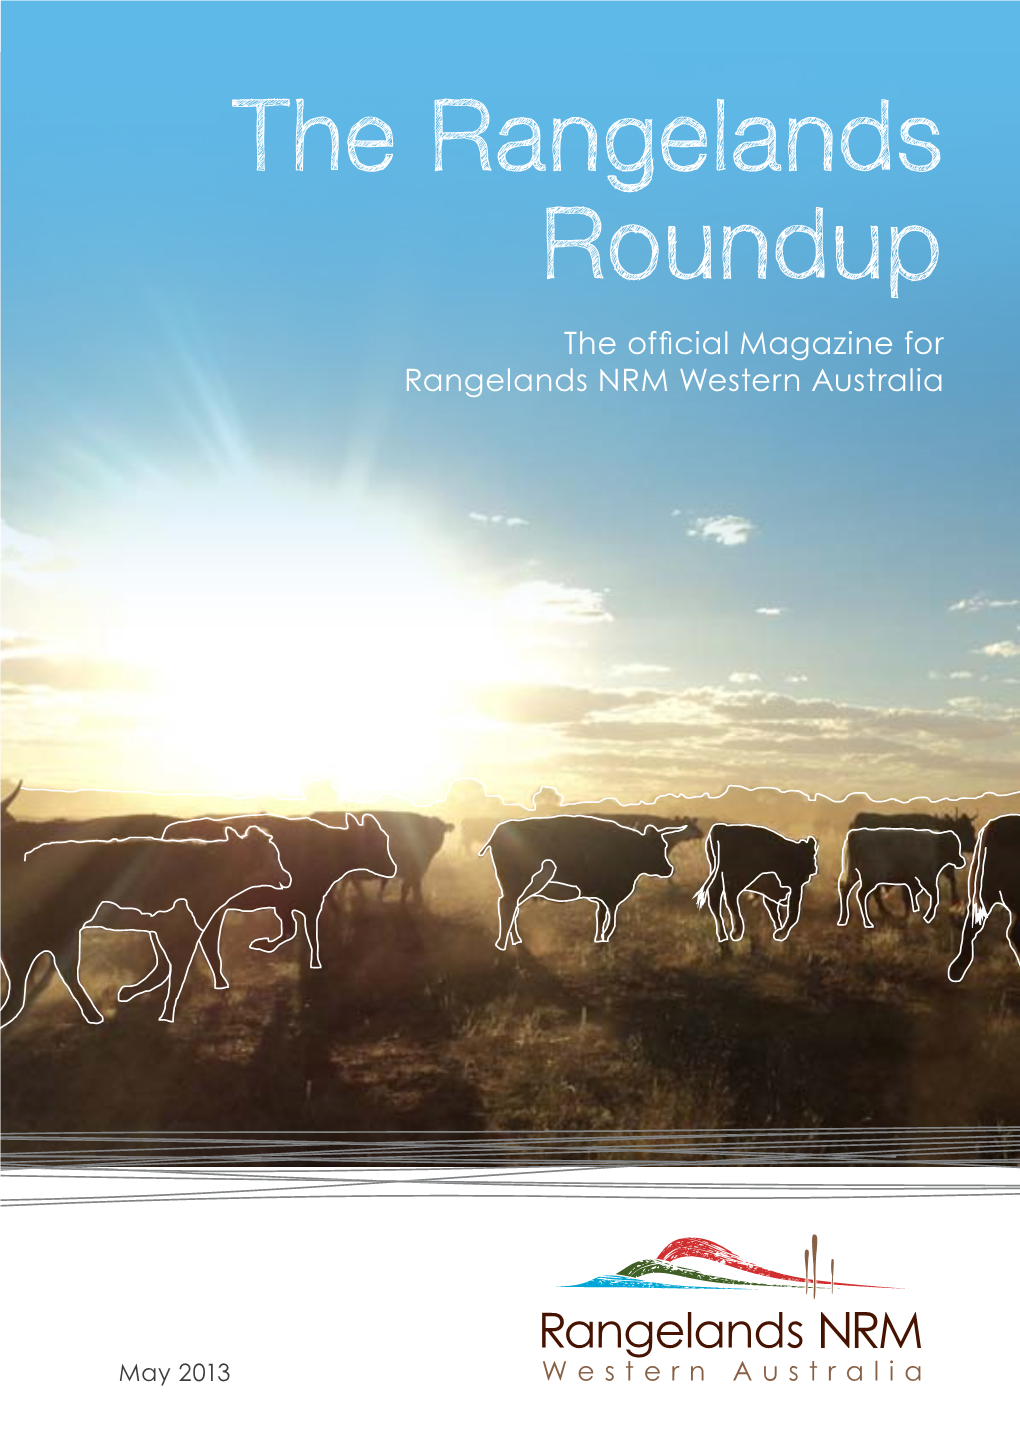 The Rangelands Roundup